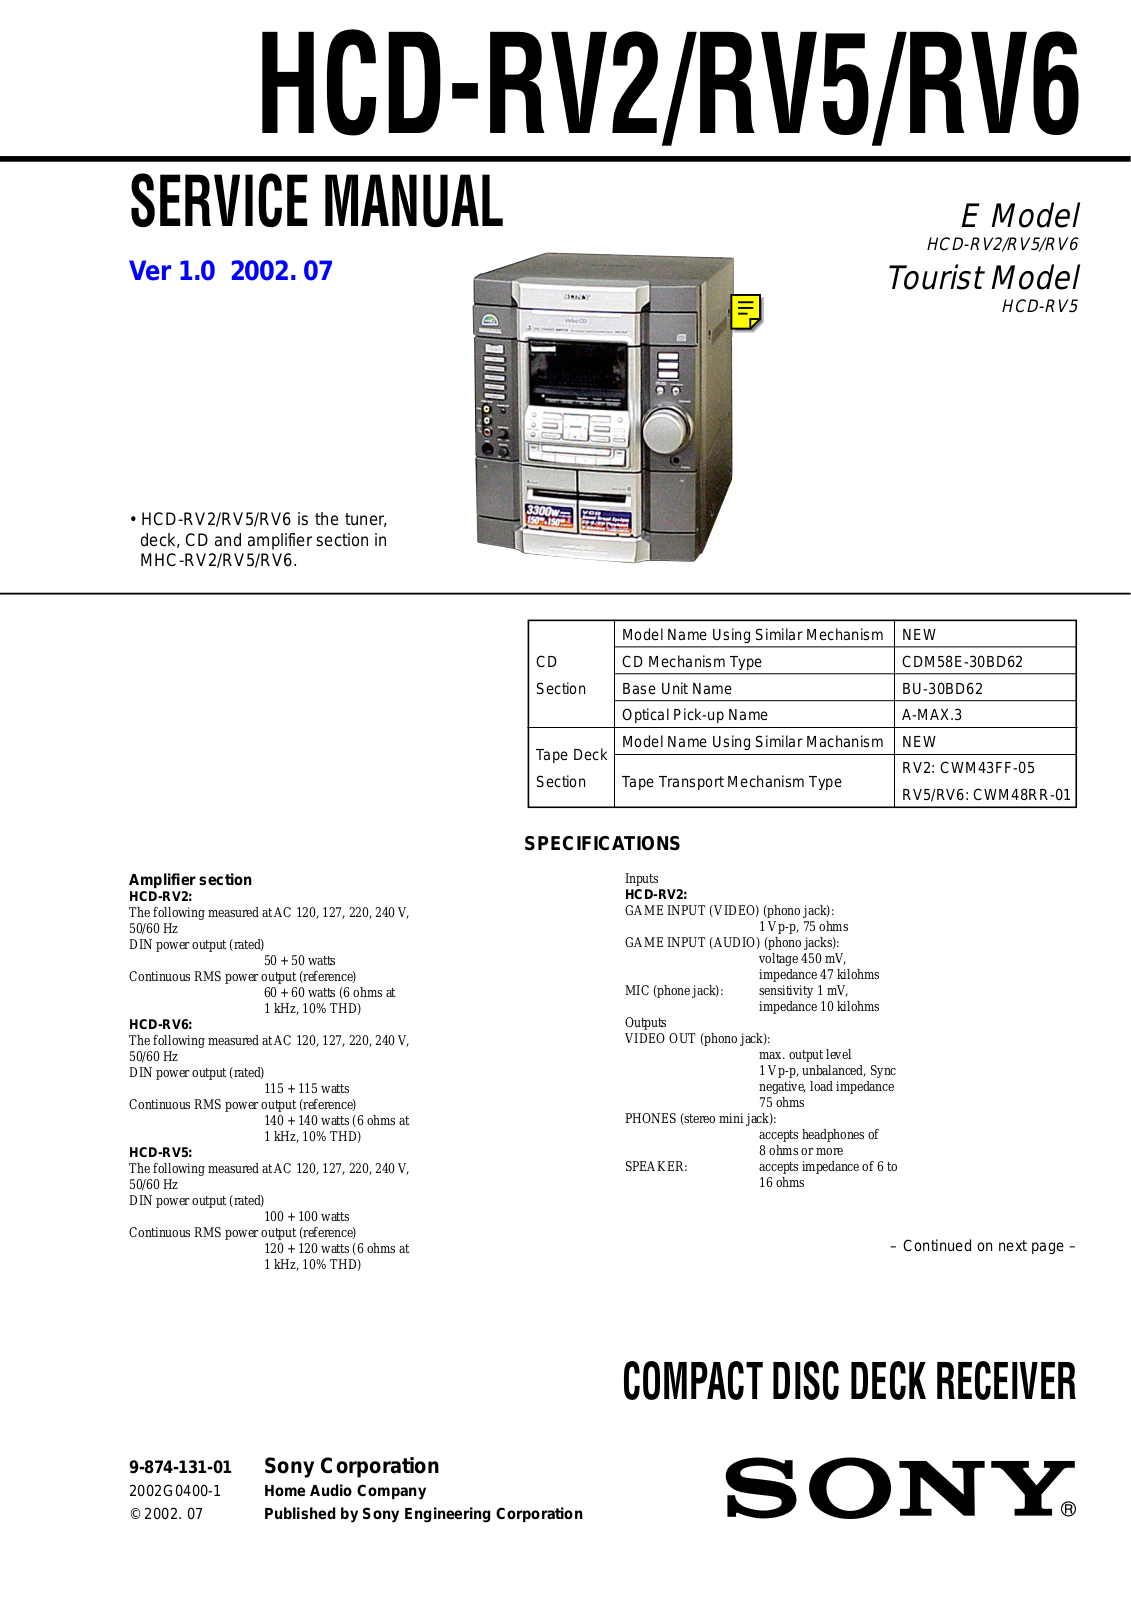 SONY HCD-RV2, HCD-RV5, HCD-RV6 Service Manual